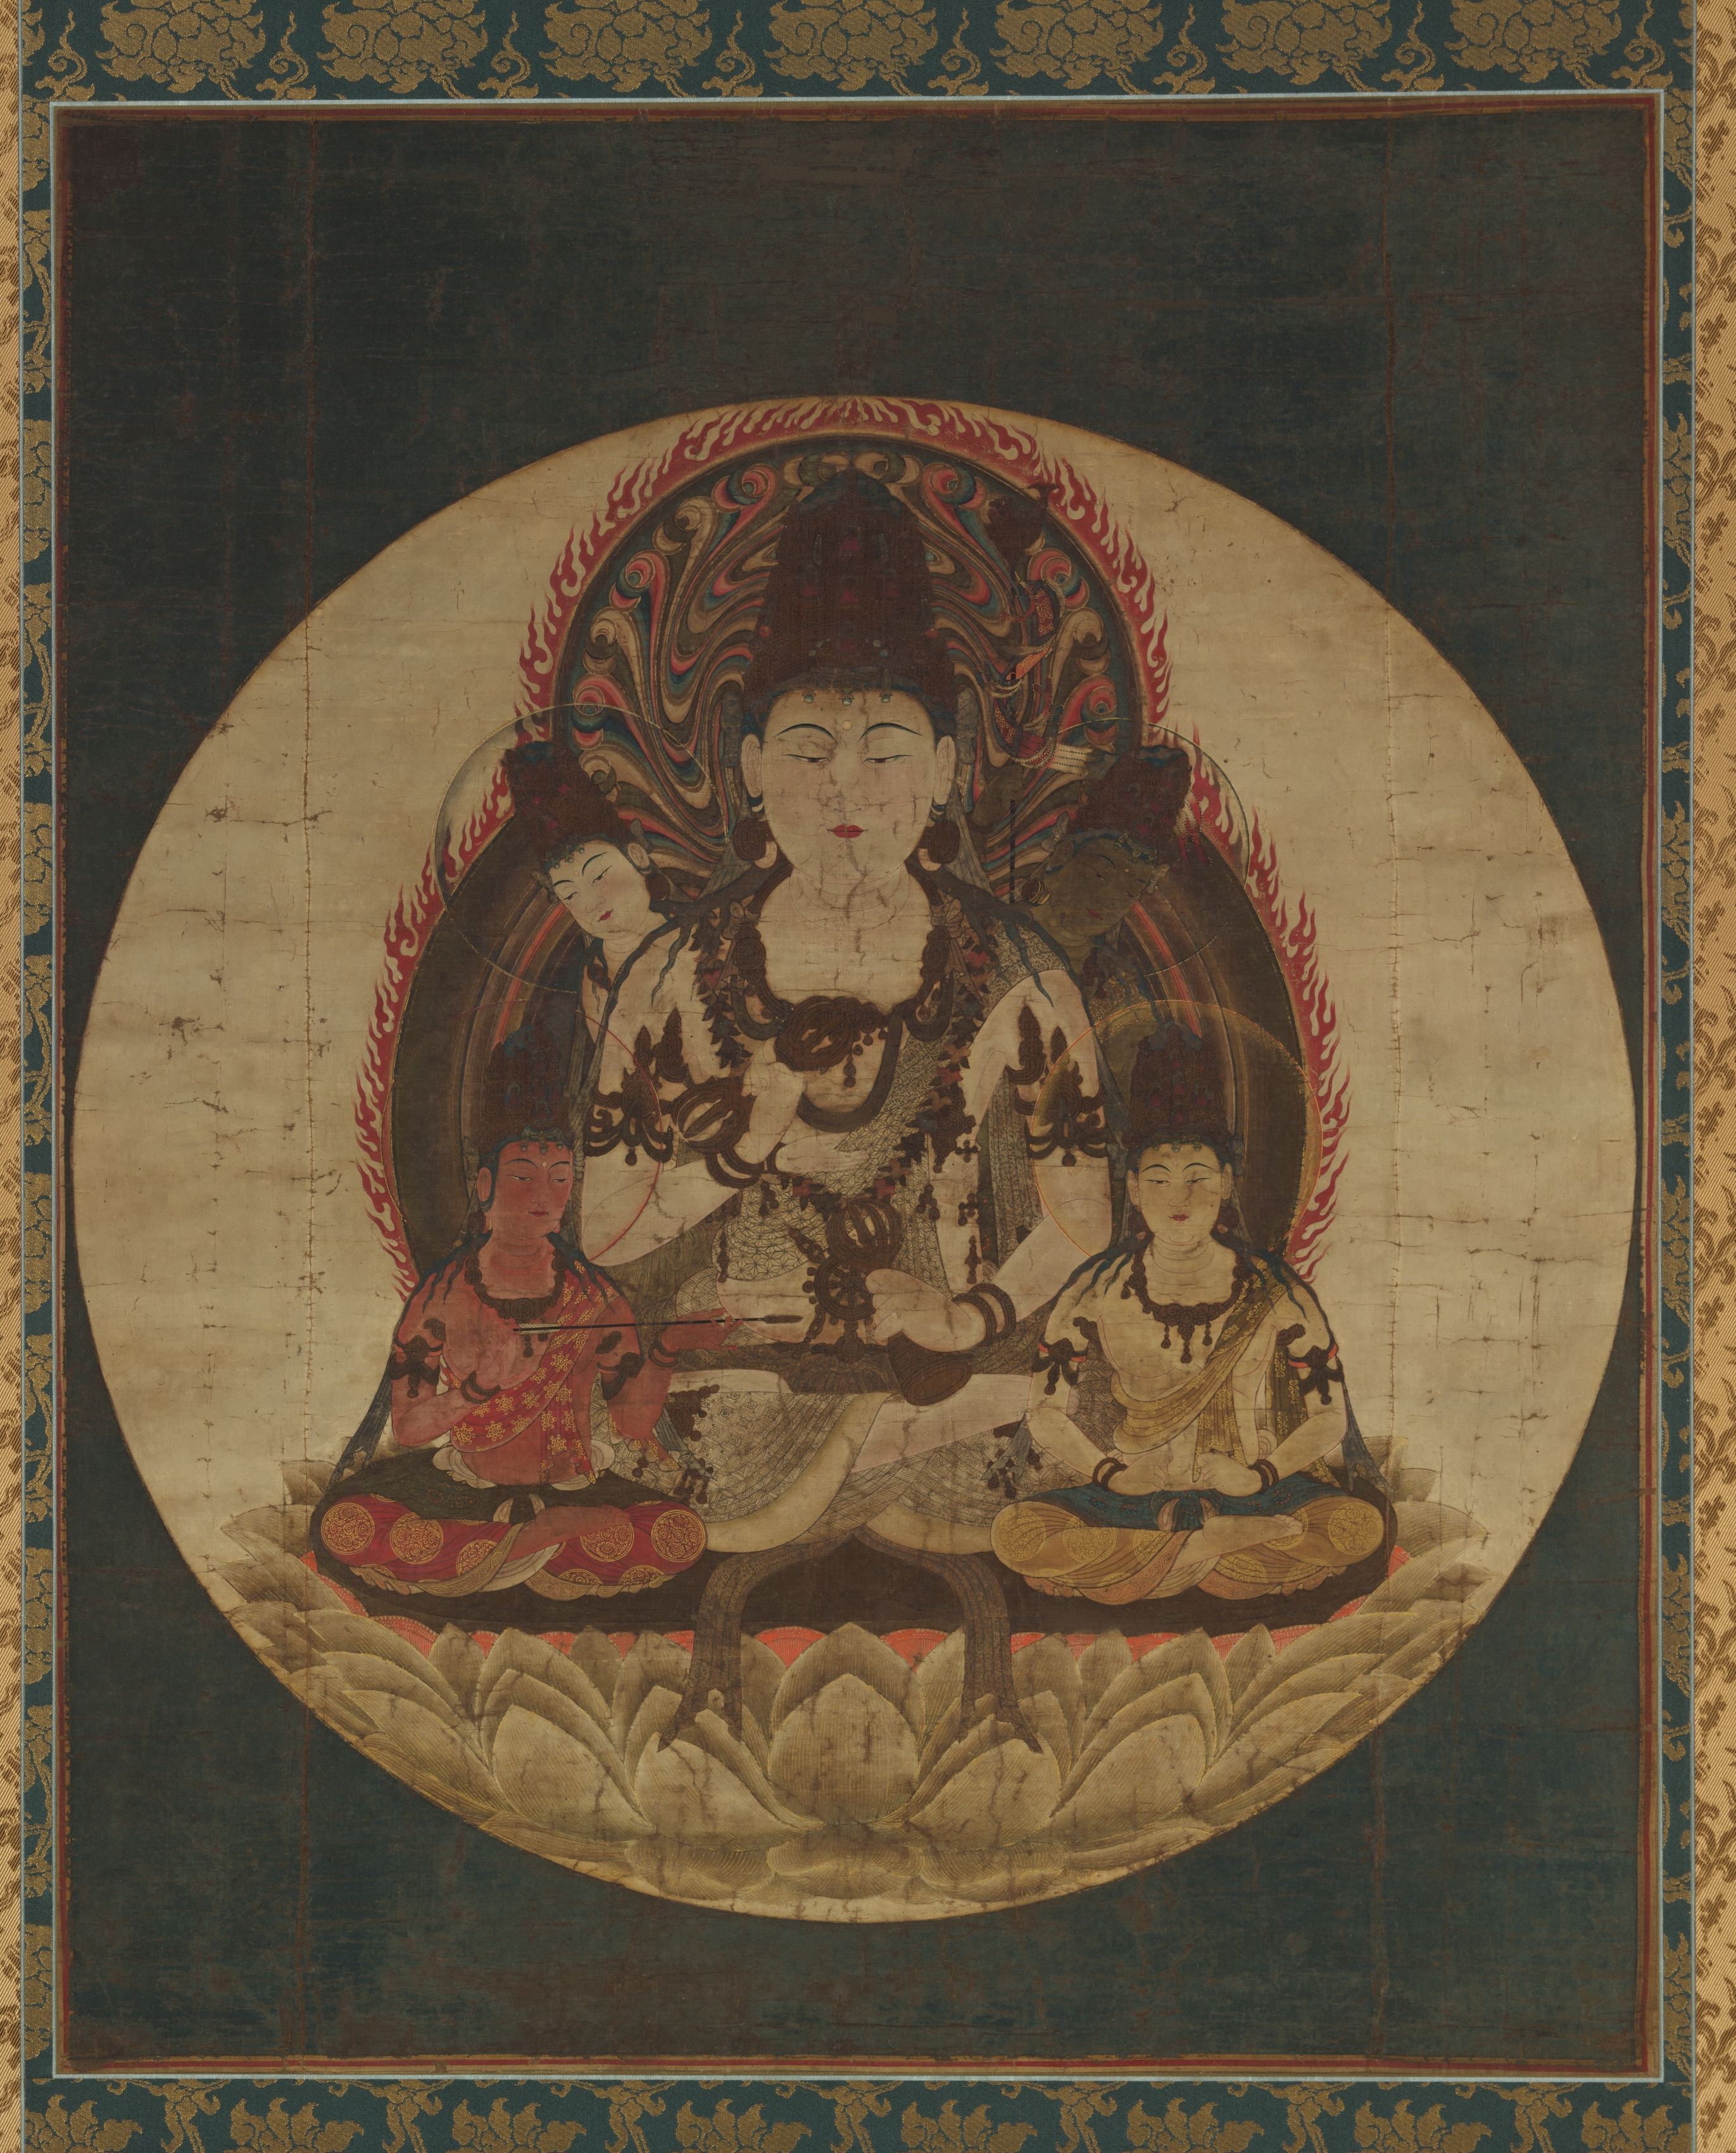 The Secret Five Bodhisattvas (Gohimitsu Bosatsu)